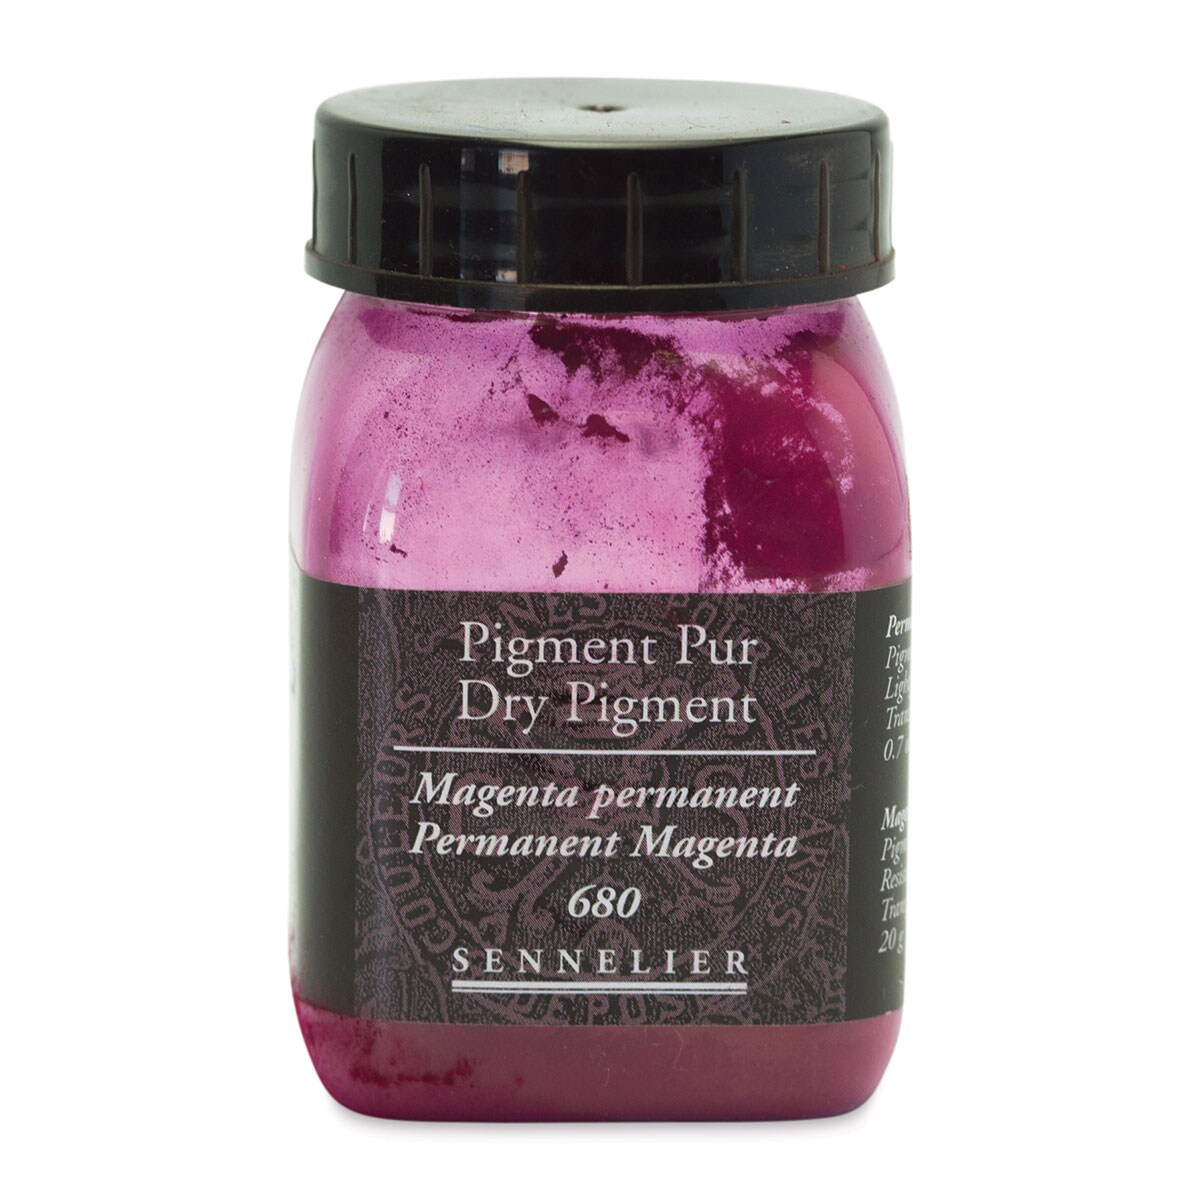 Sennelier Dry Pigment - Permanent Magenta, 20 g jar